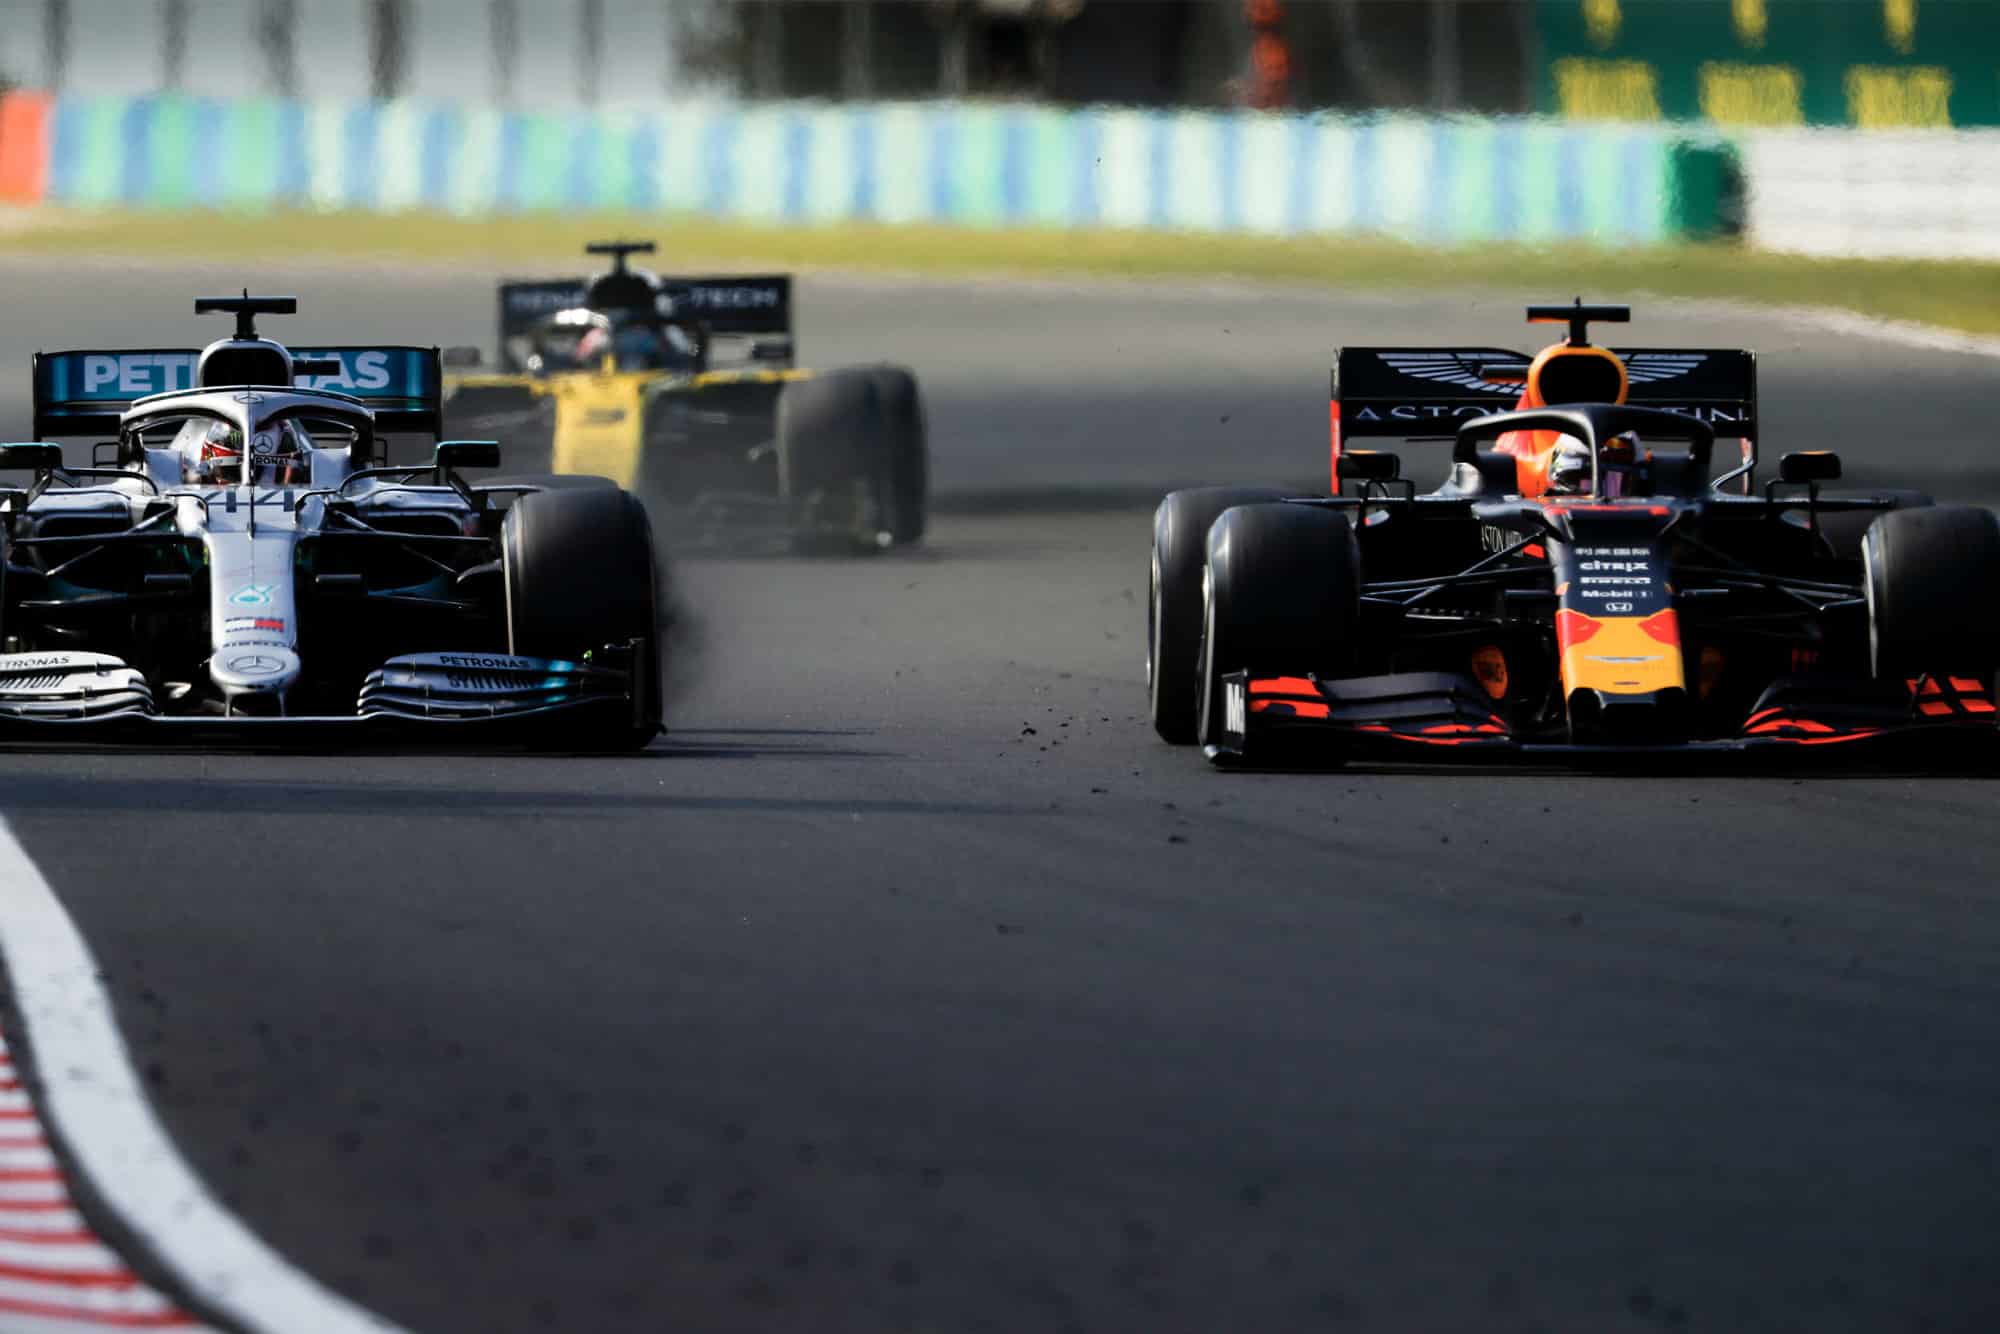 Lewis Hamilton goes wheel-to-wheel with Max Verstappen